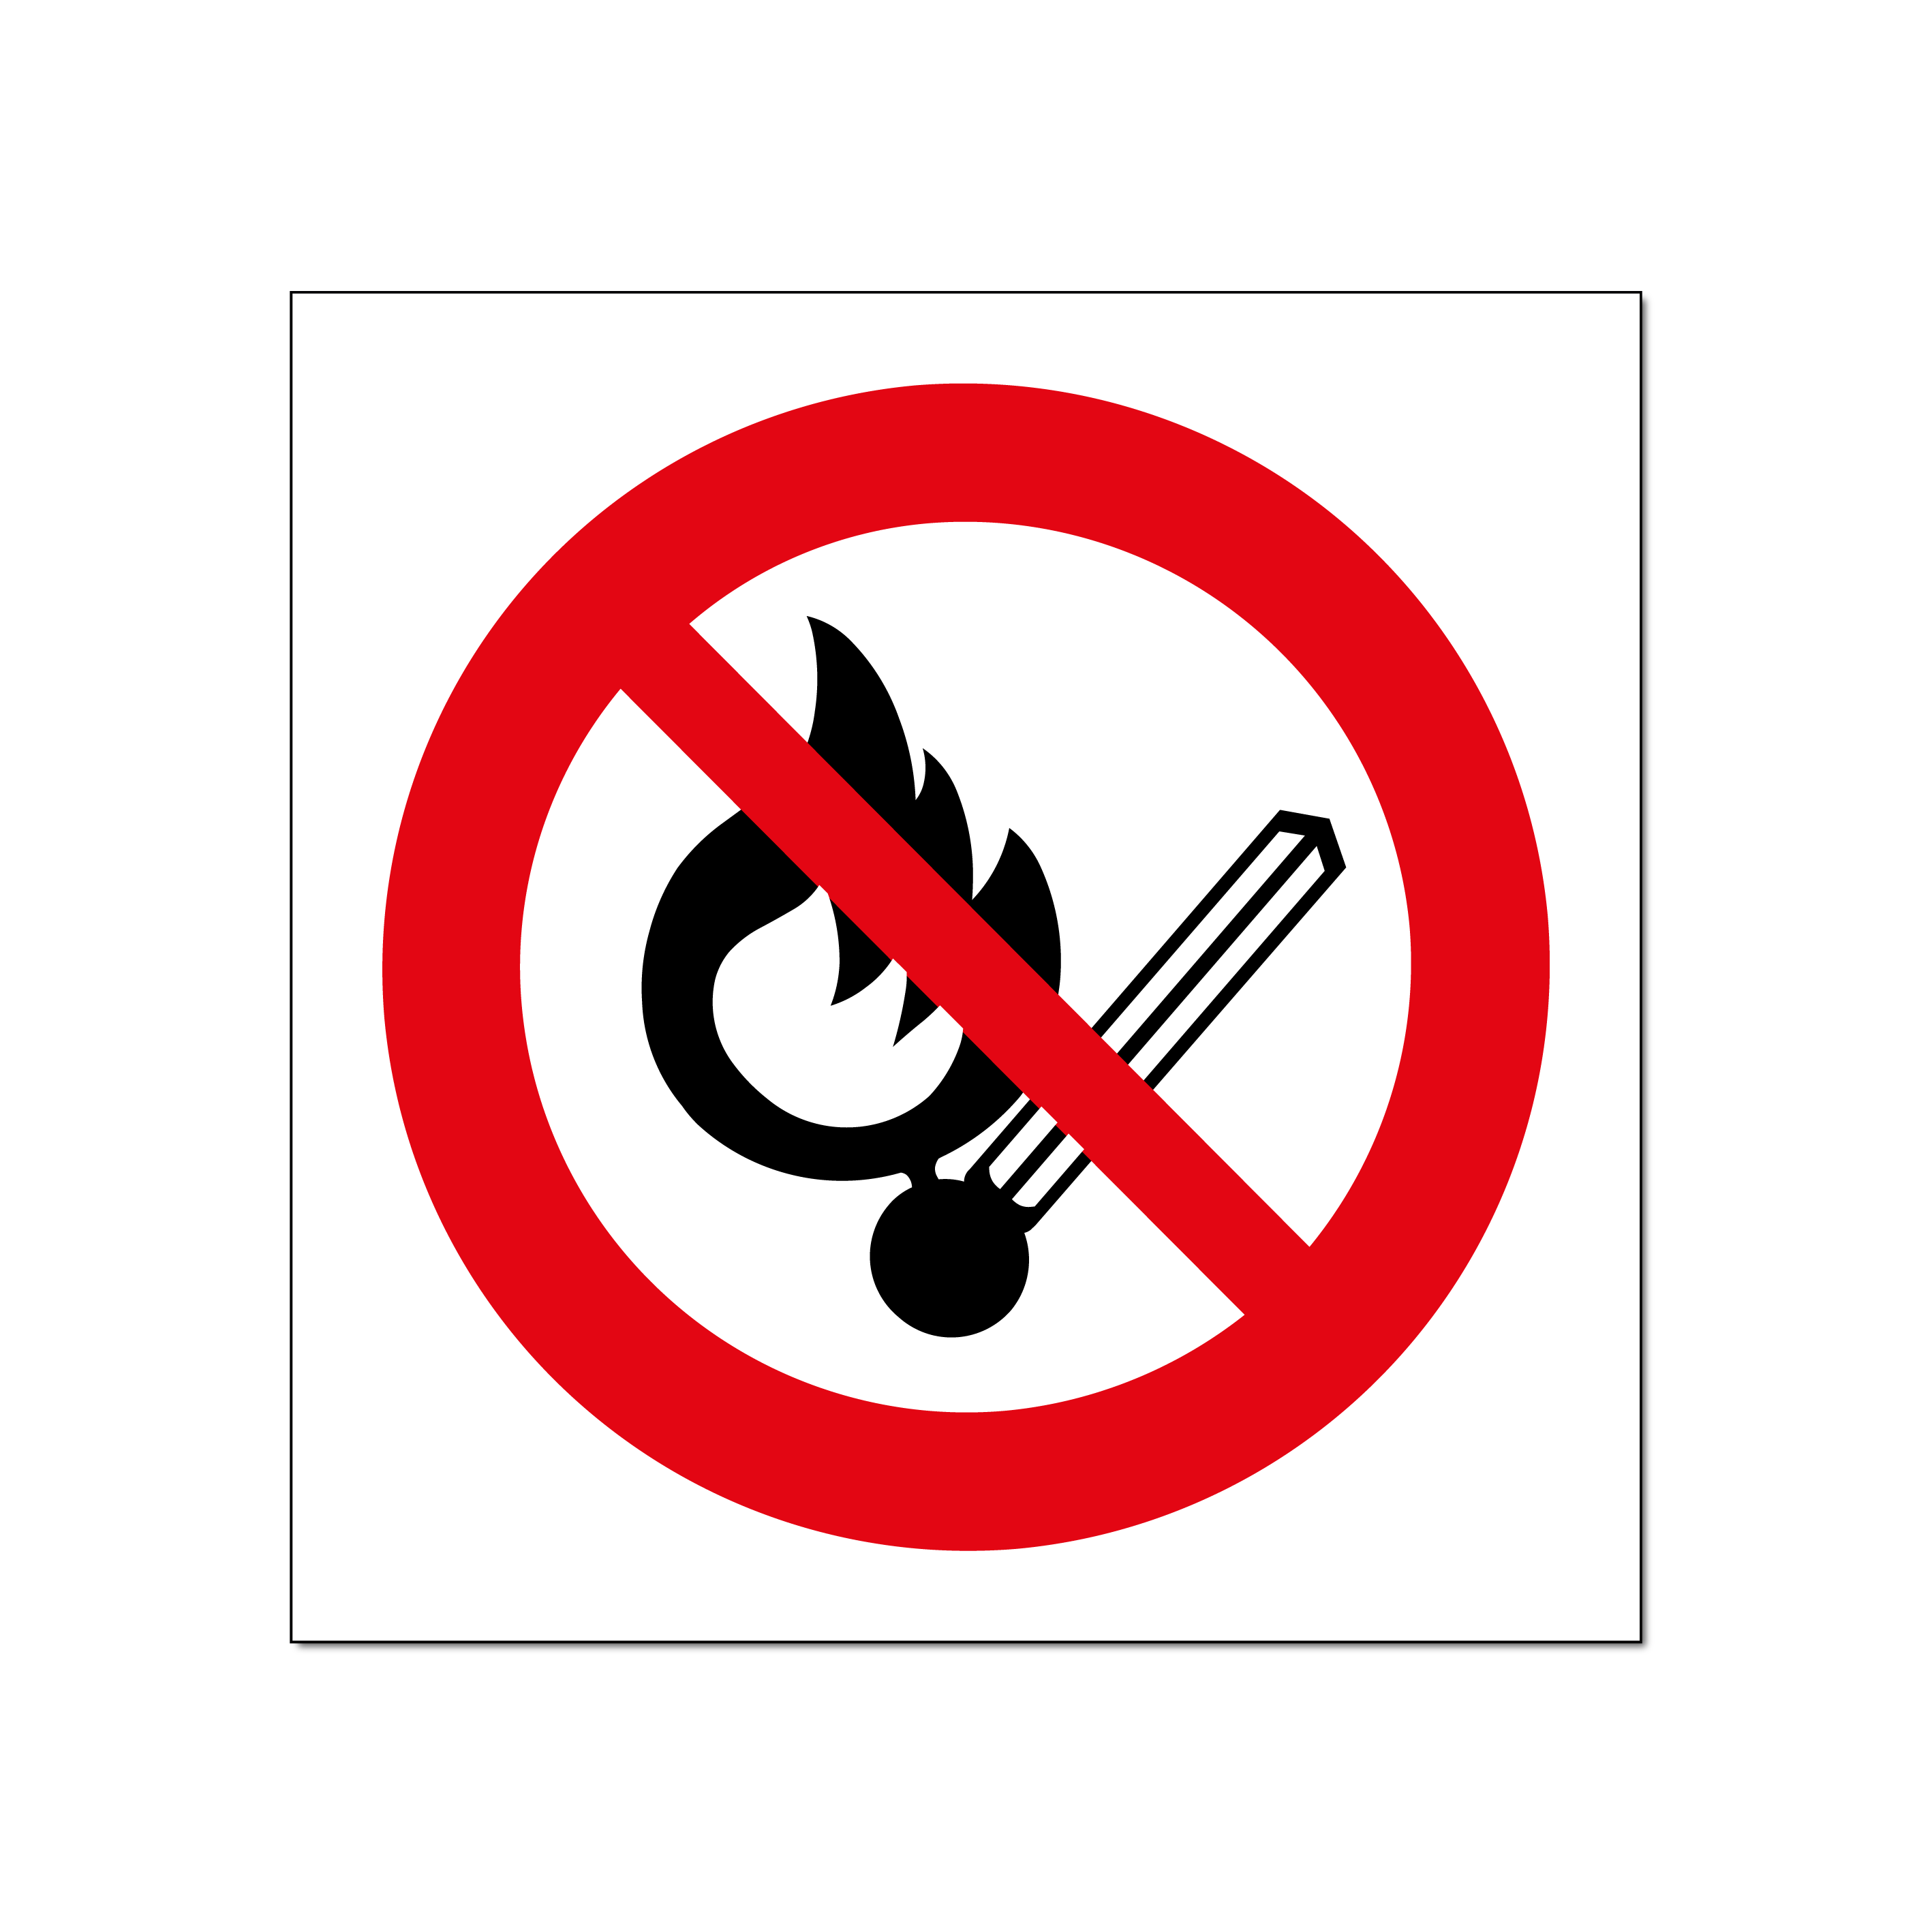 Vuur, open vlam en roken verboden bord / sticker